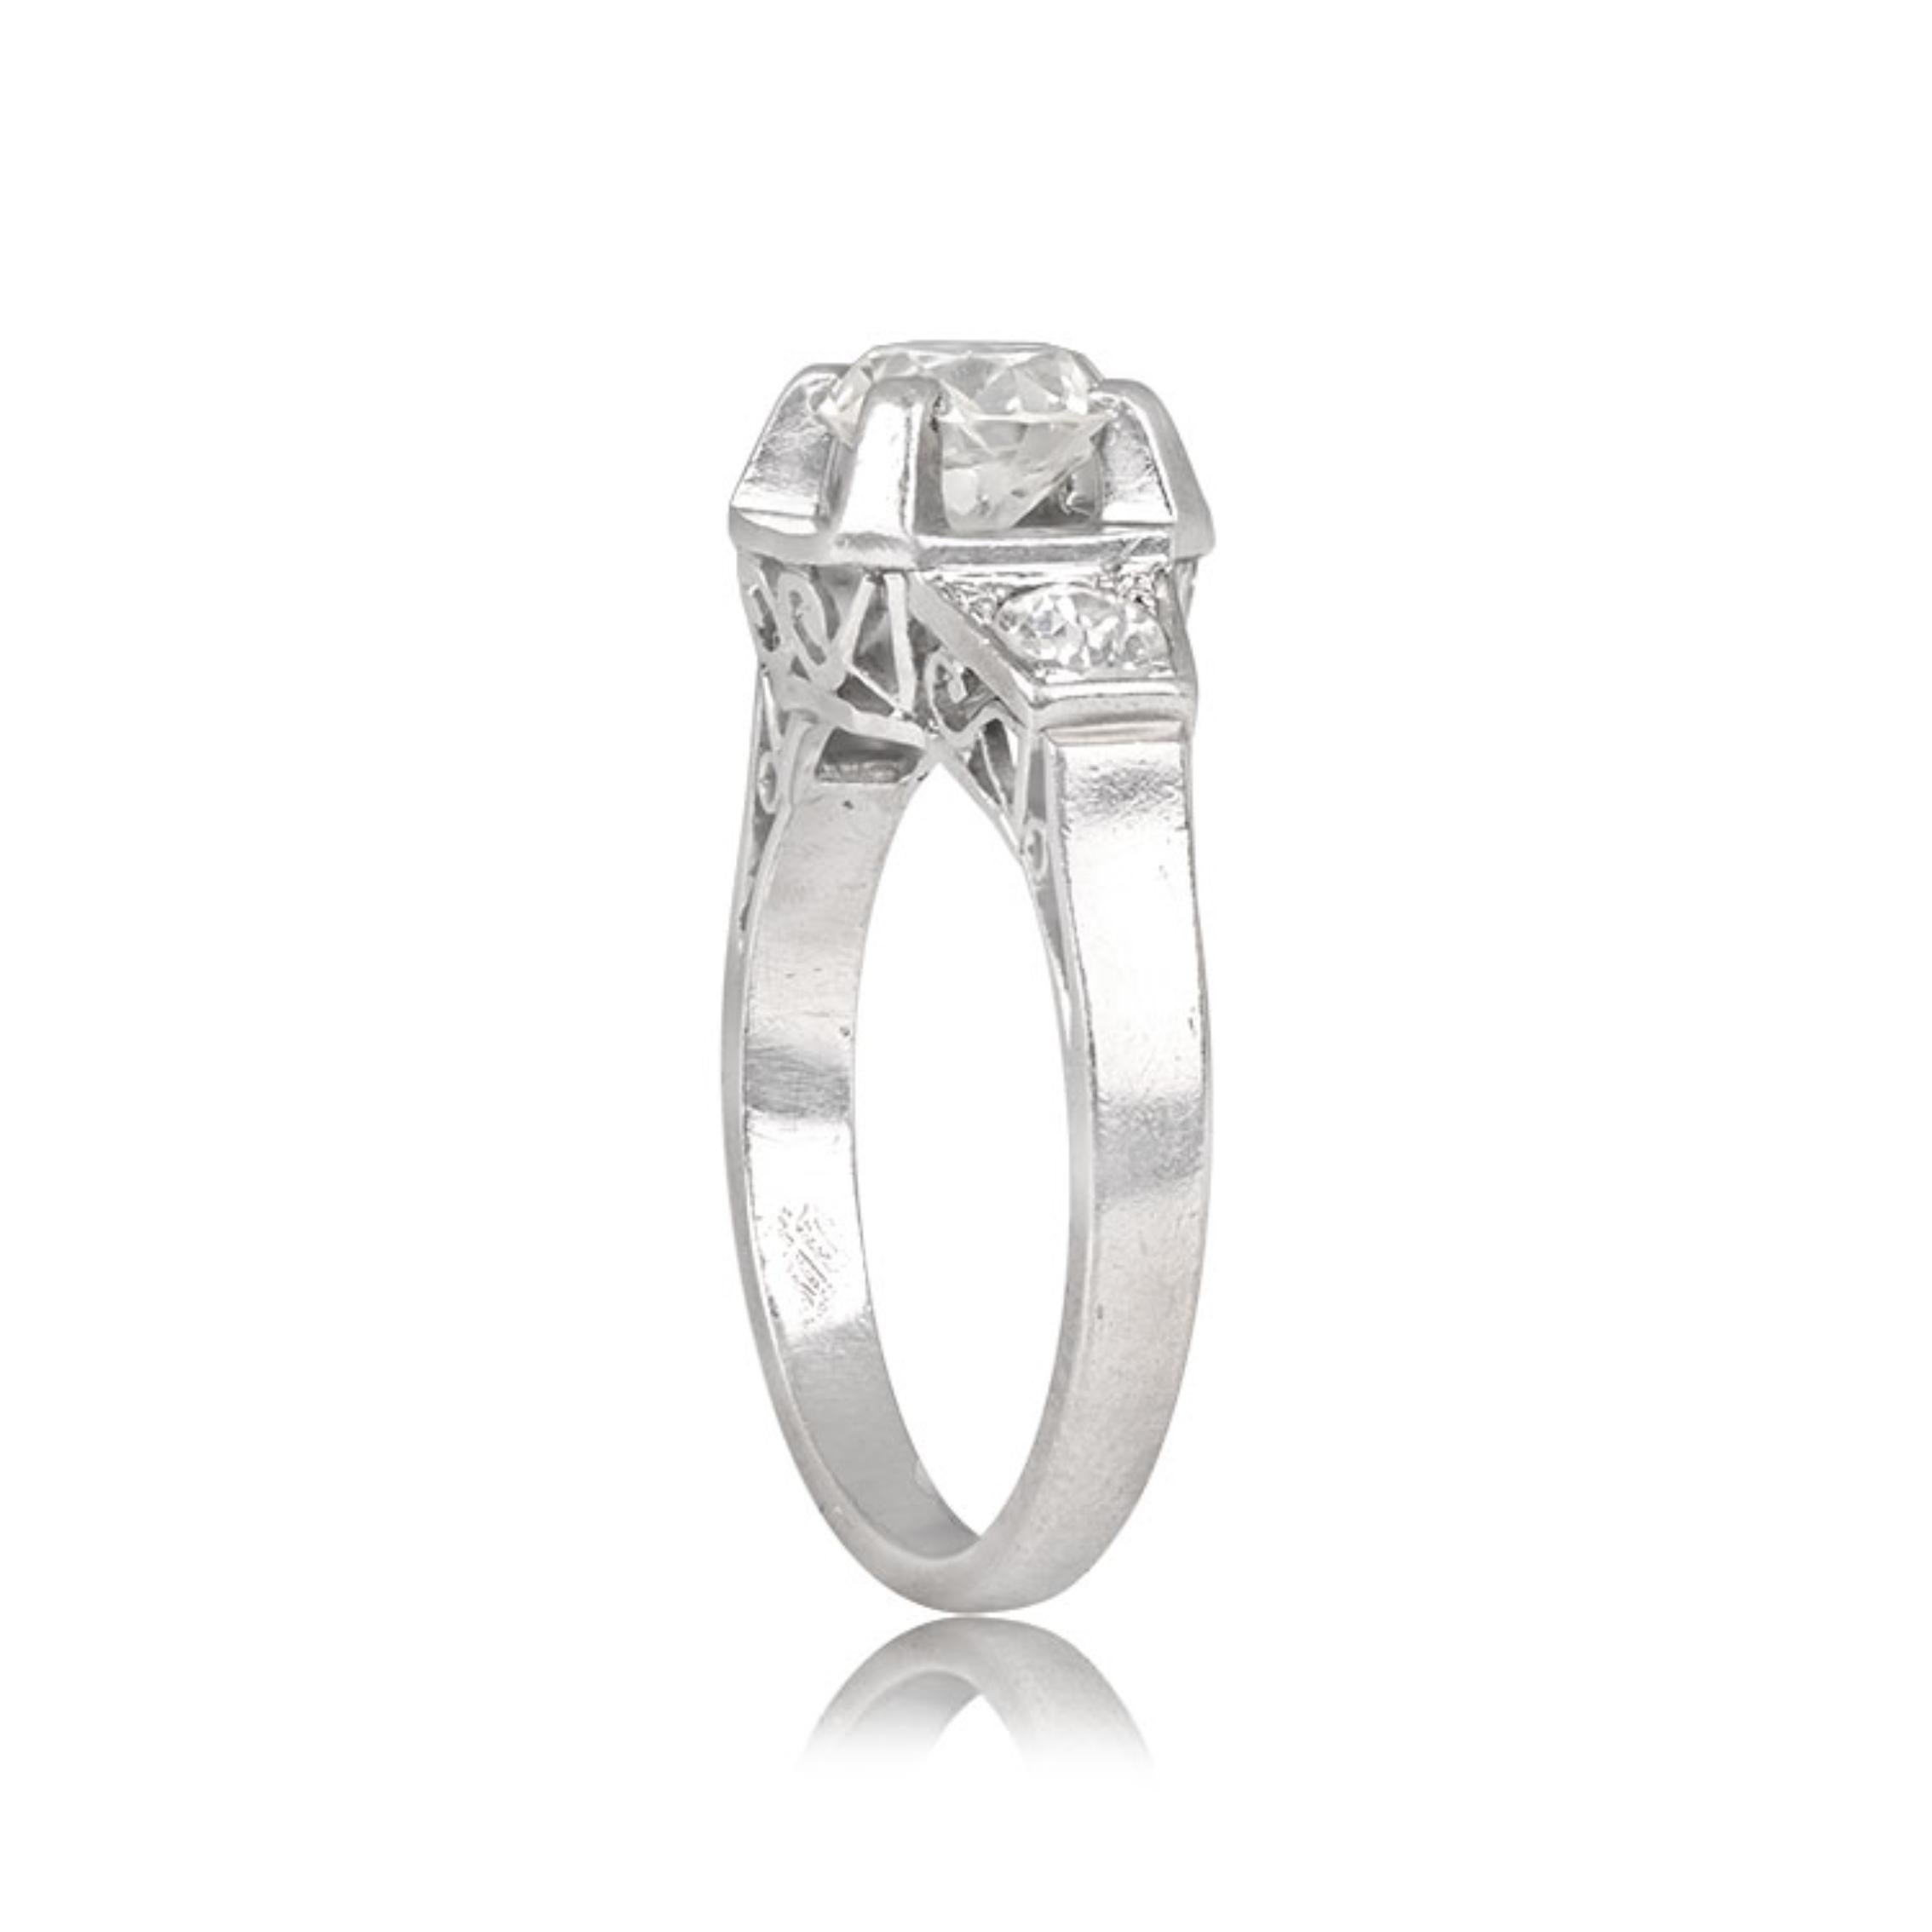 Art Deco Vintage 0.85ct Old European Cut Diamond Engagement Ring, VS1 Clarity, Platinum